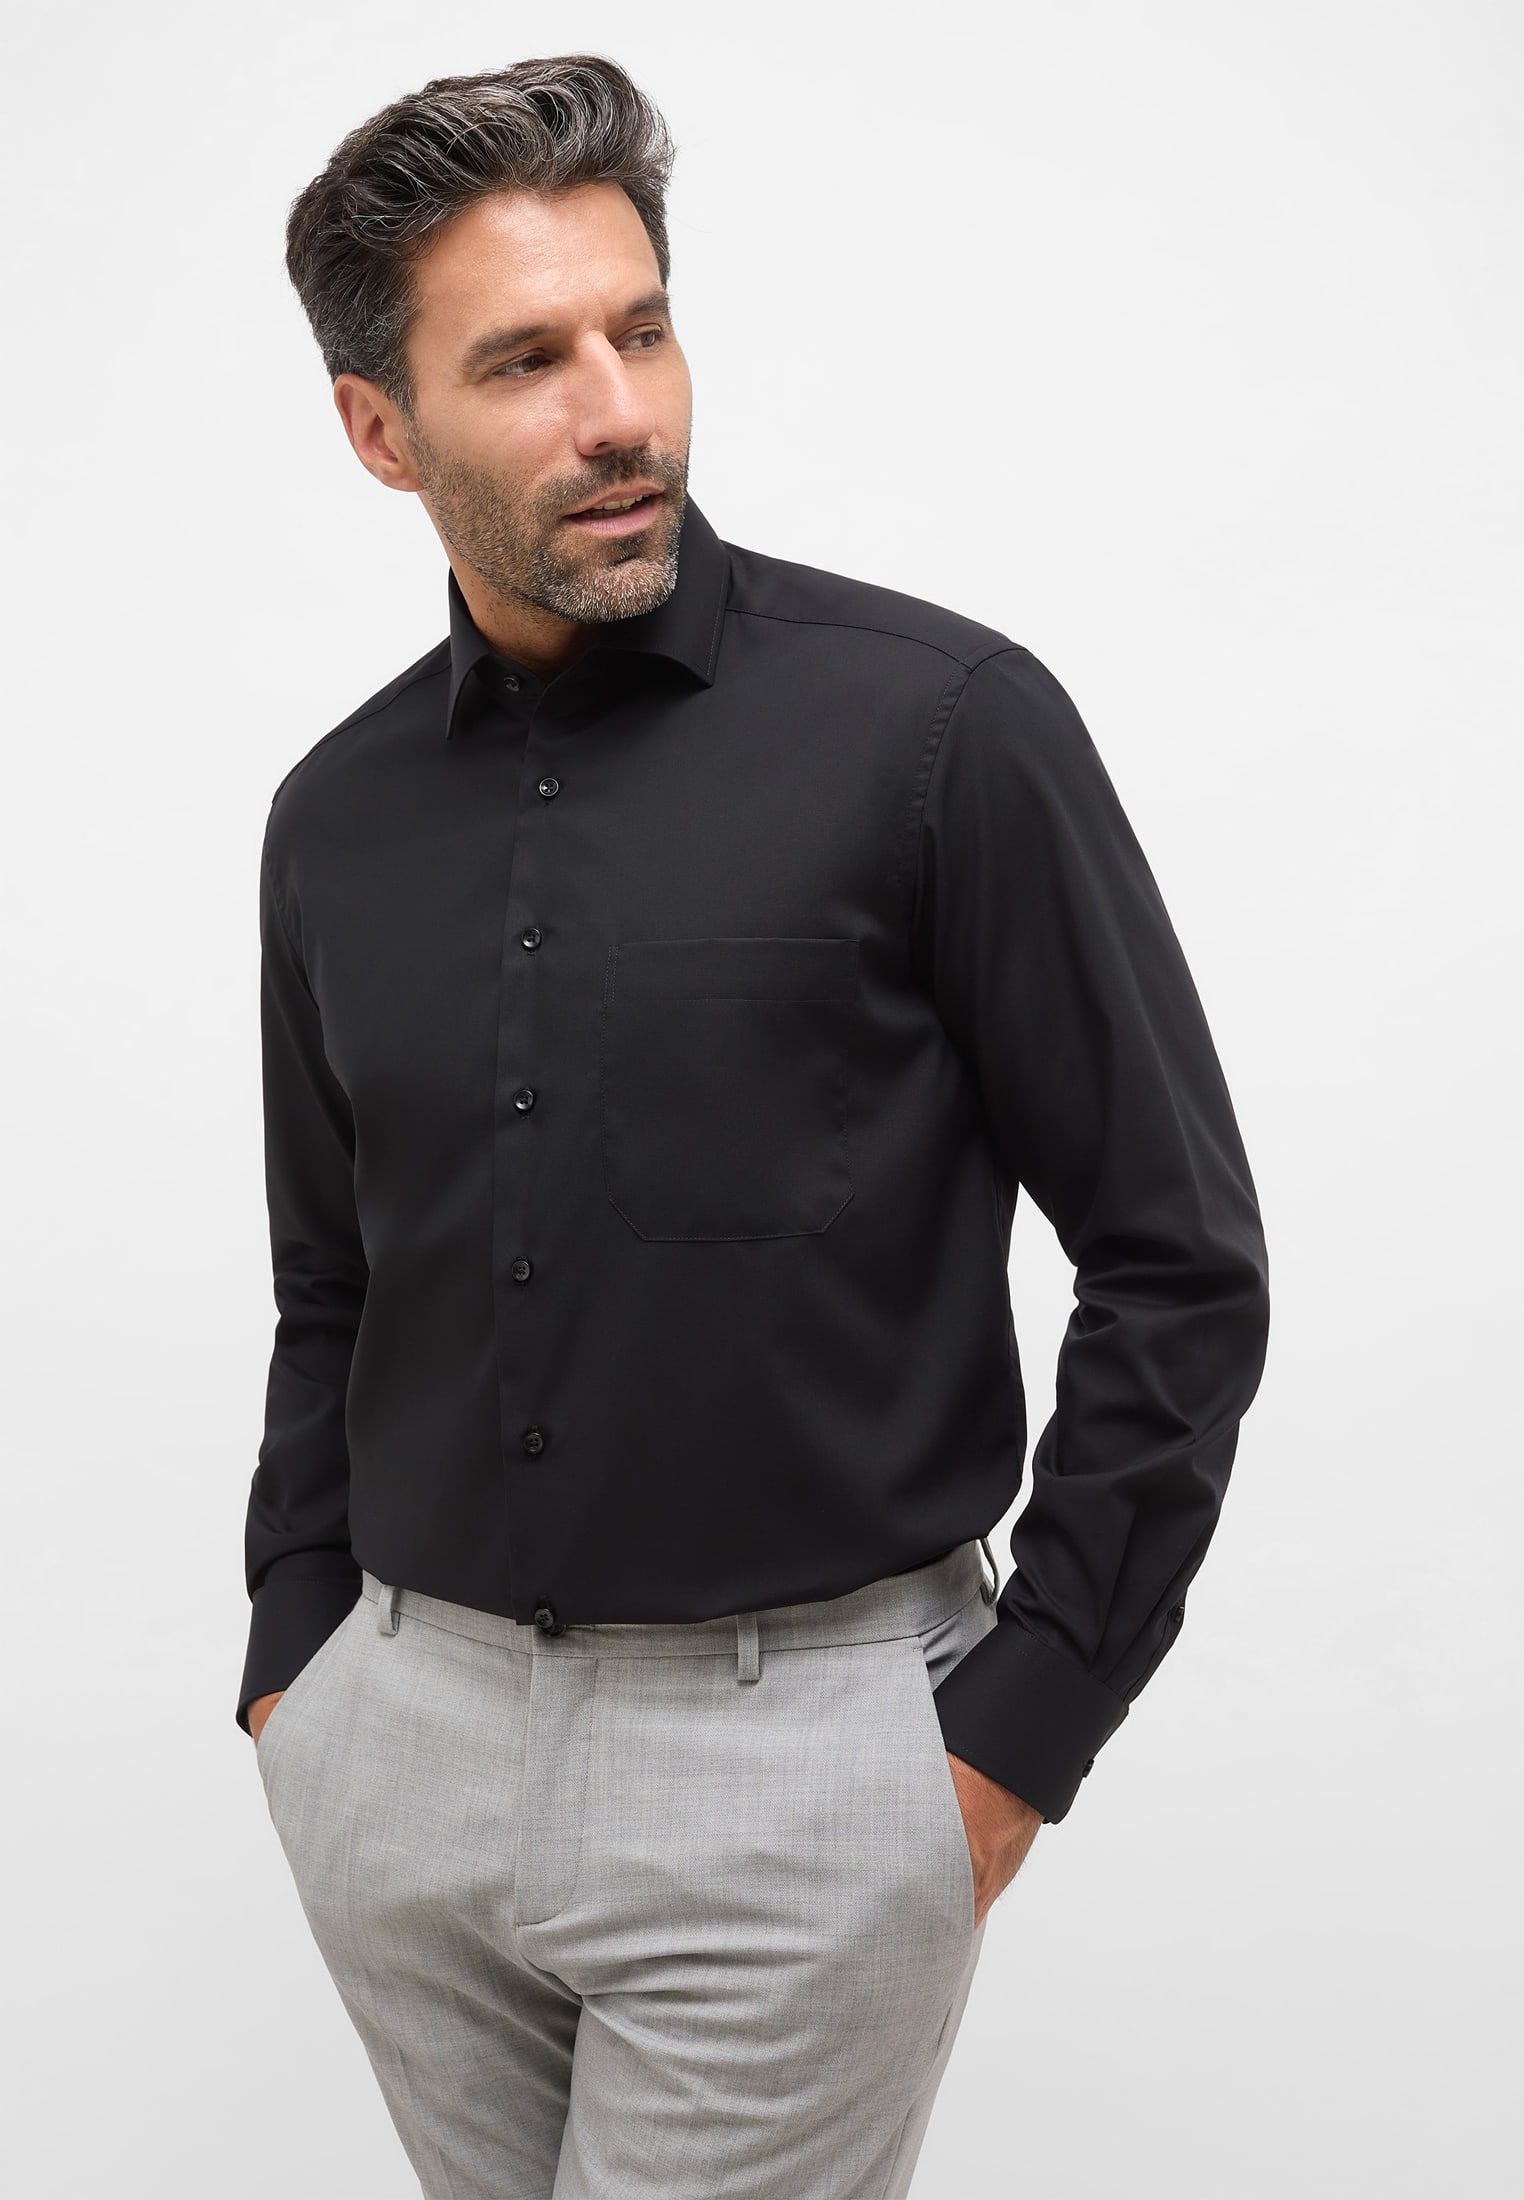 COMFORT FIT Original Shirt in | Langarm schwarz schwarz | 1SH11781-03-91-45-1/1 unifarben | 45 